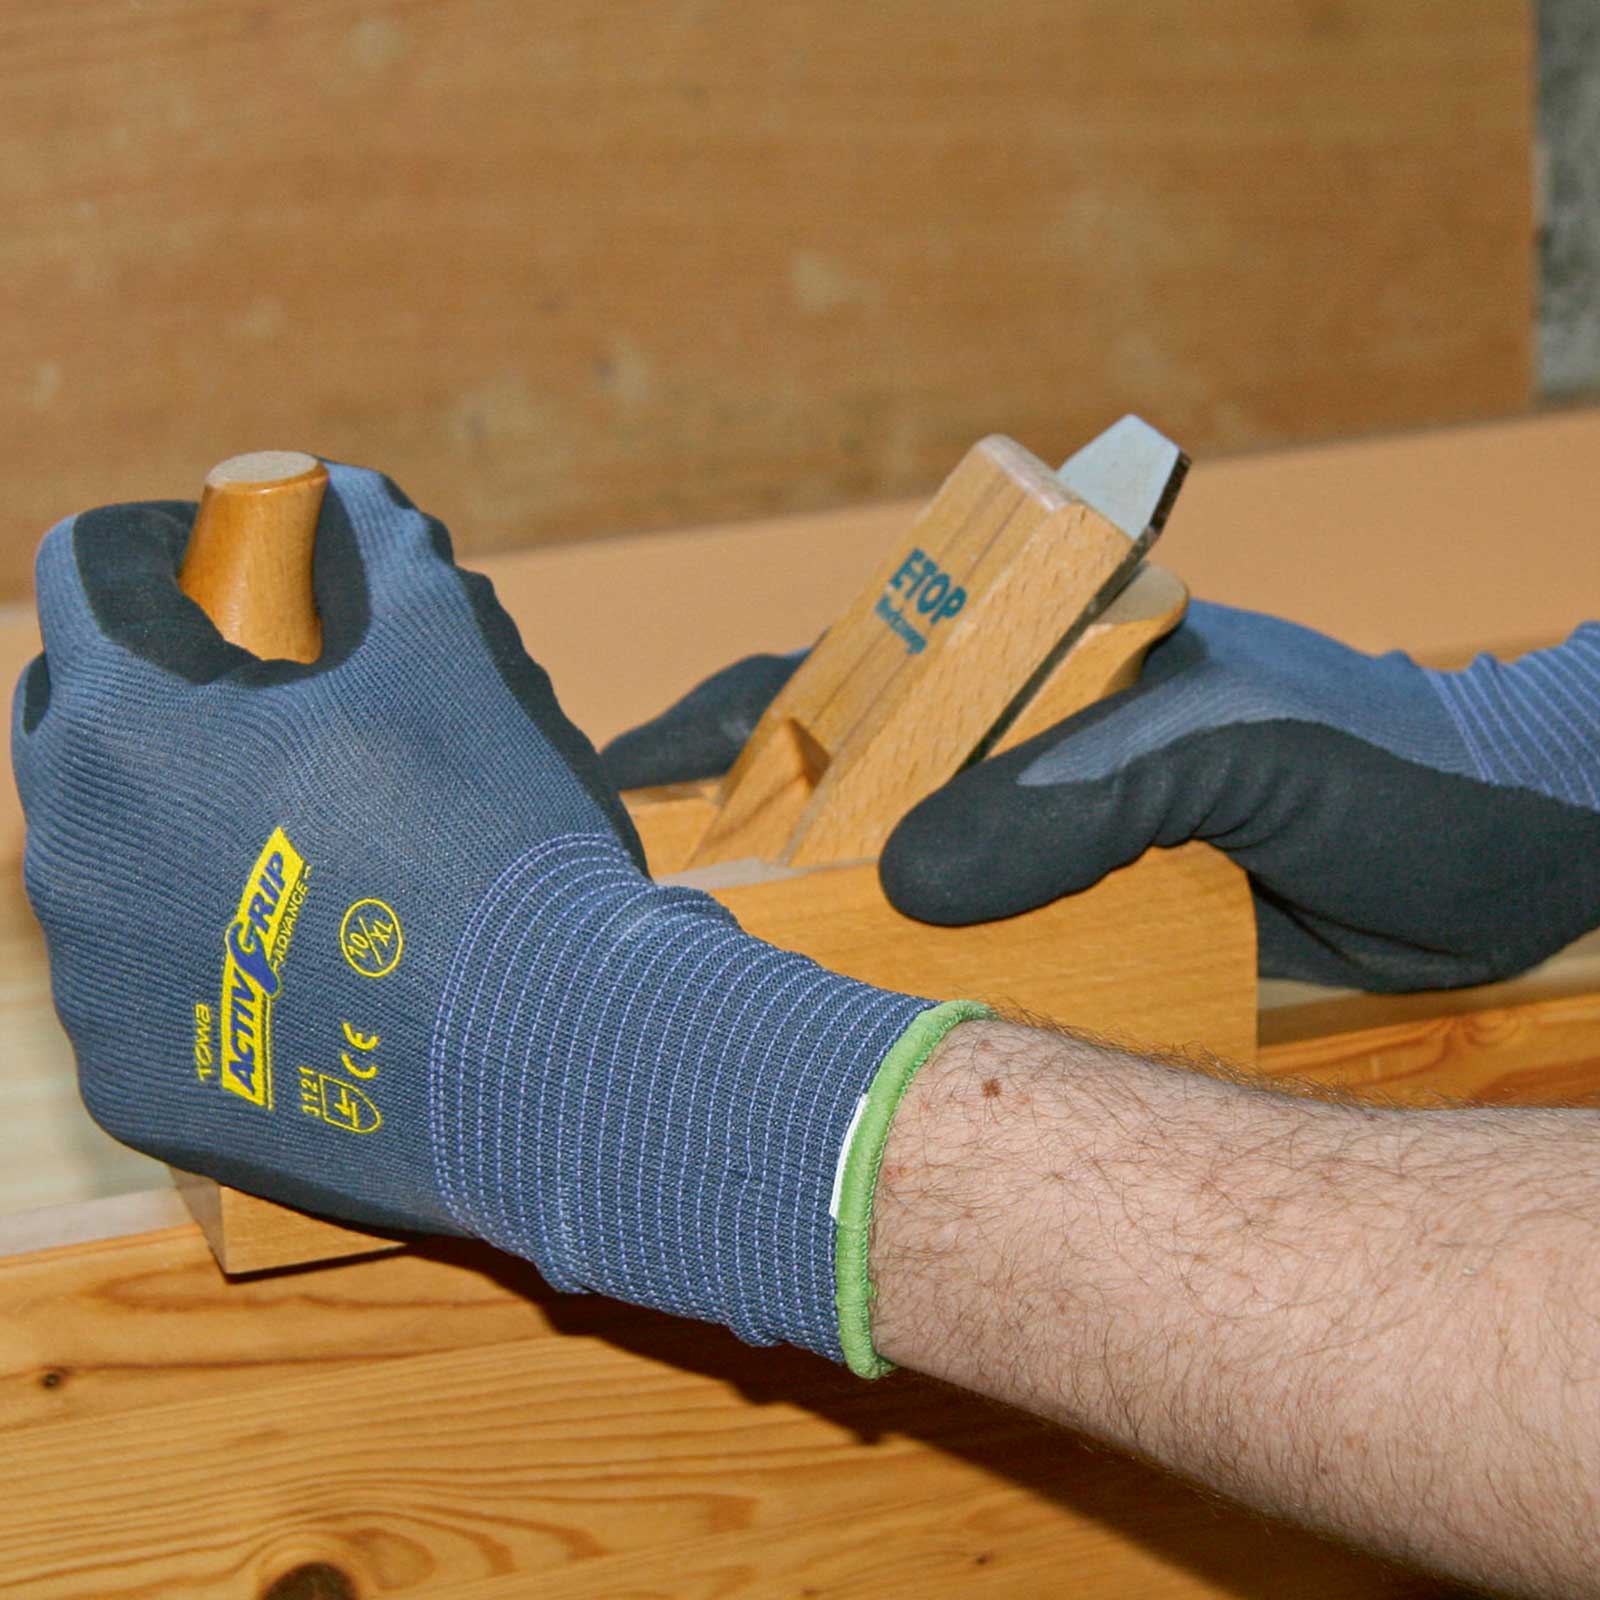 Keron mănuși de nylon fine Activ Grip Advance 8